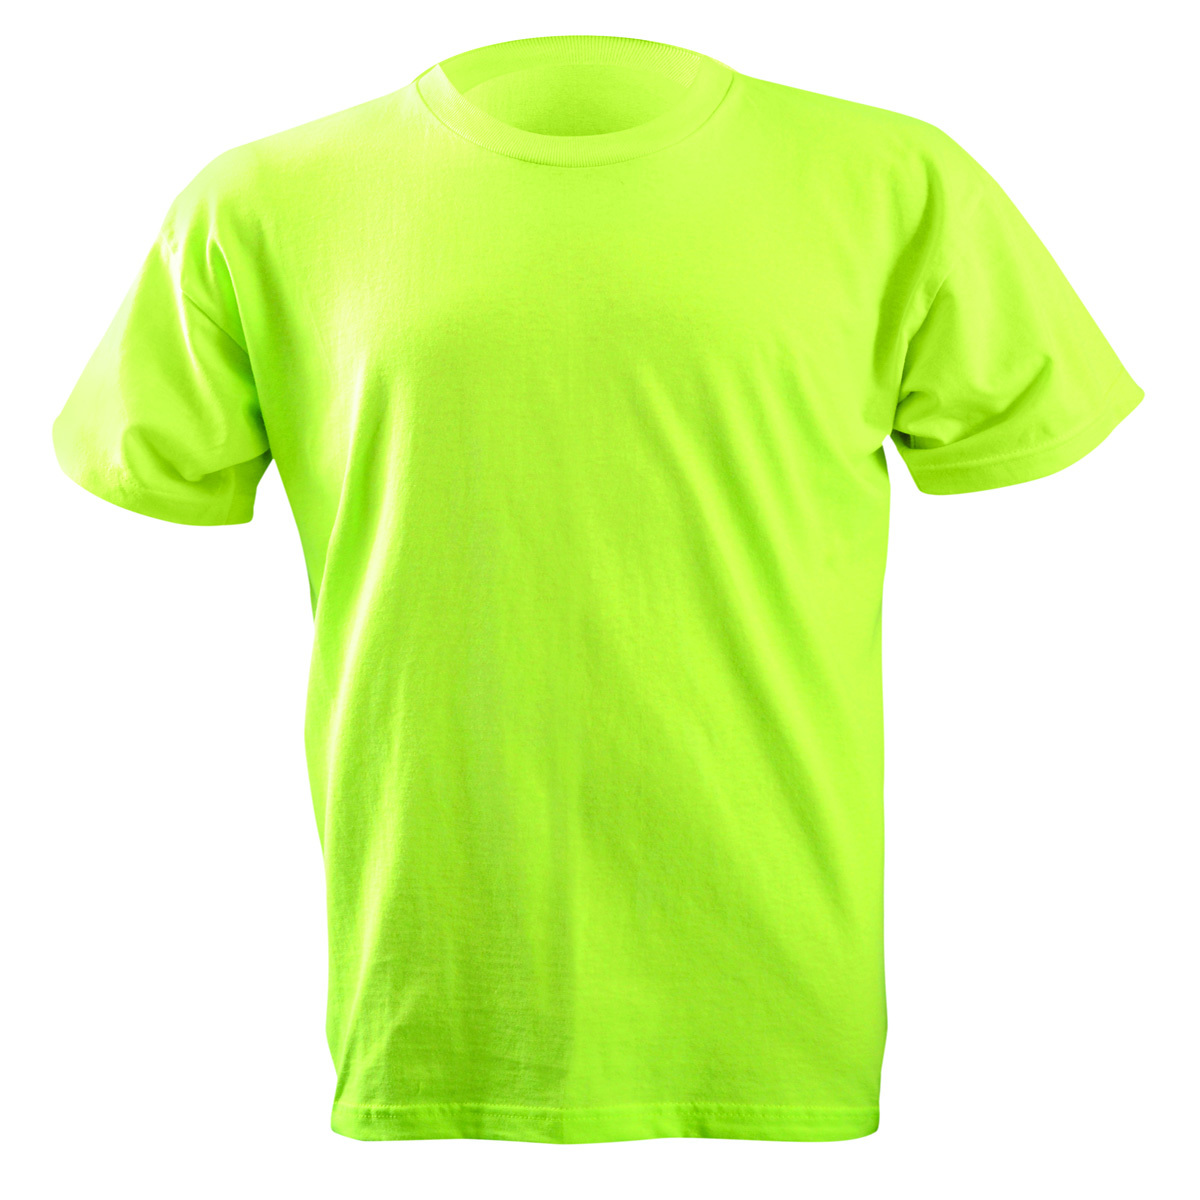 OccuNomix Small Yellow 6 Ounce Cotton T-Shirt